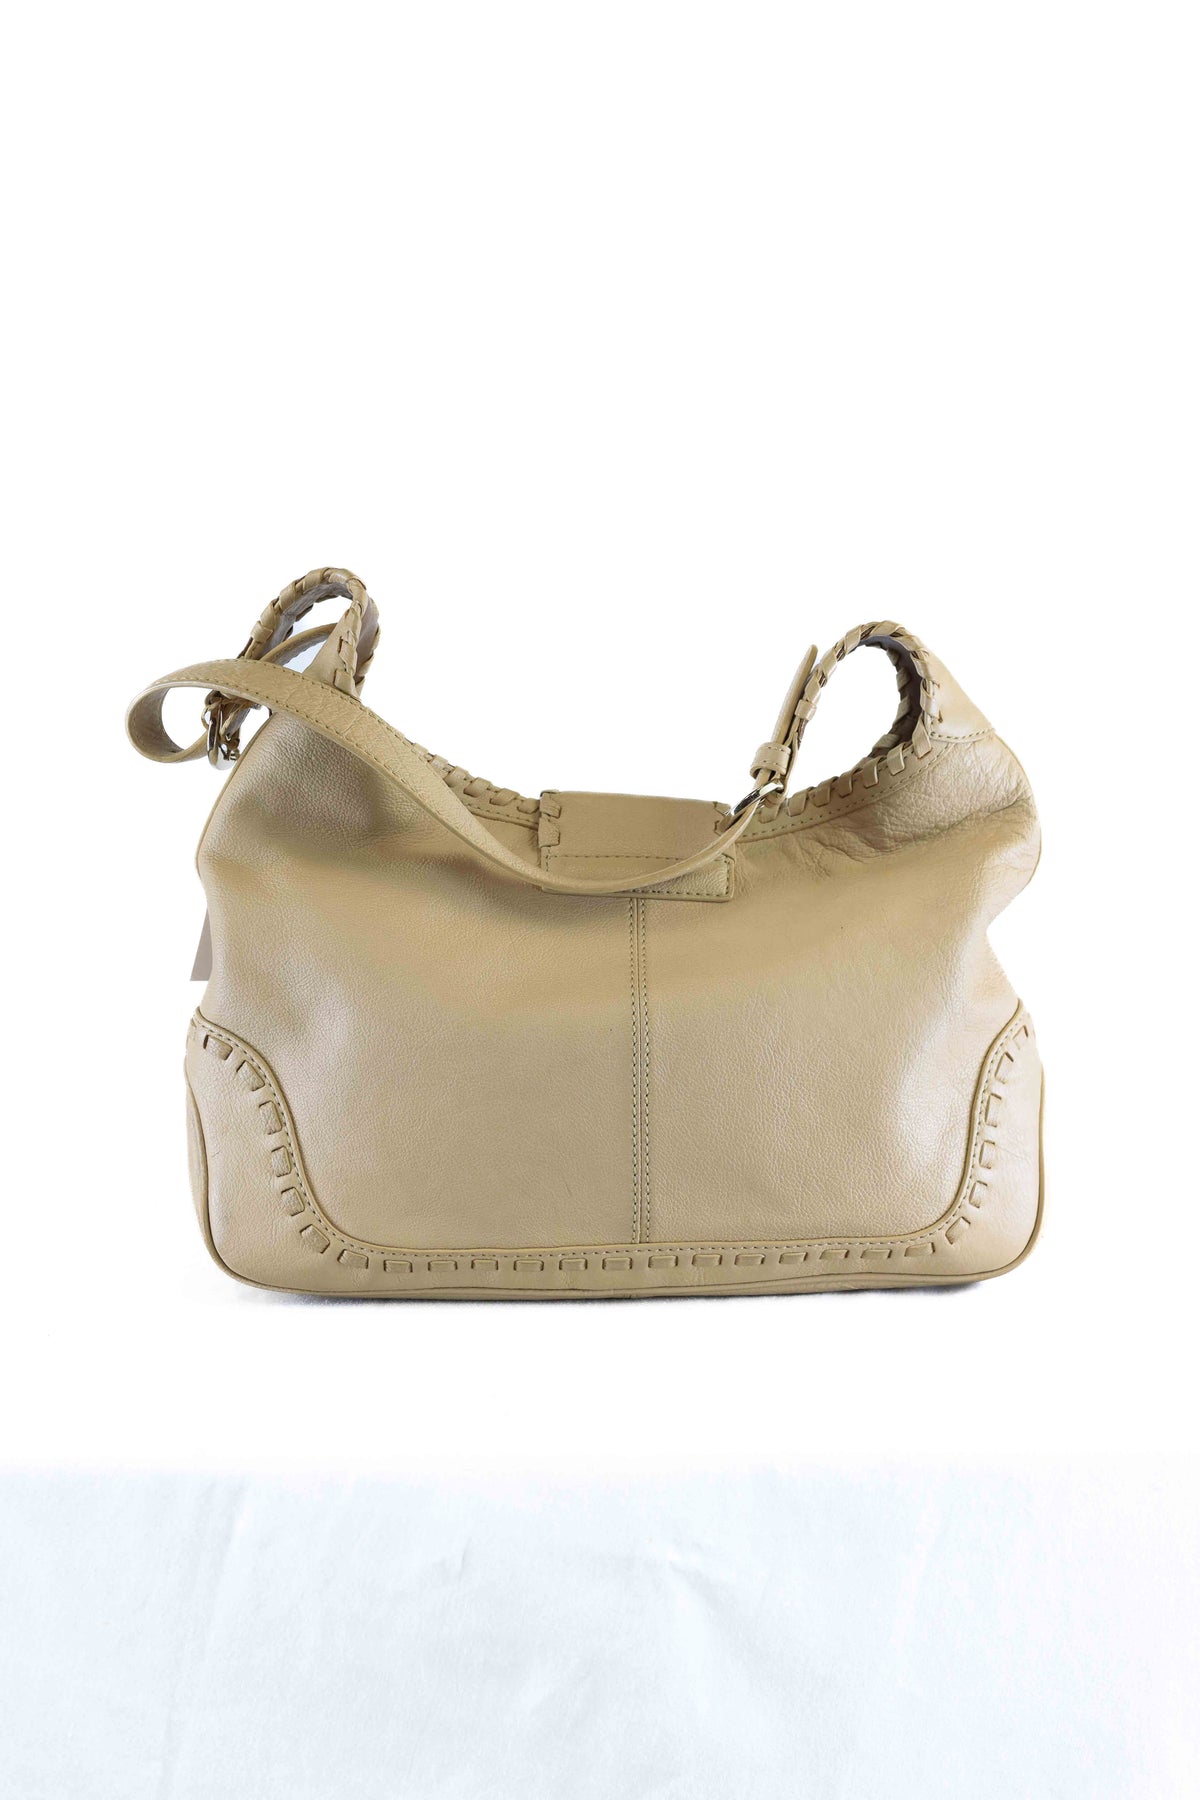 DKNY Cream Shoulder Bag